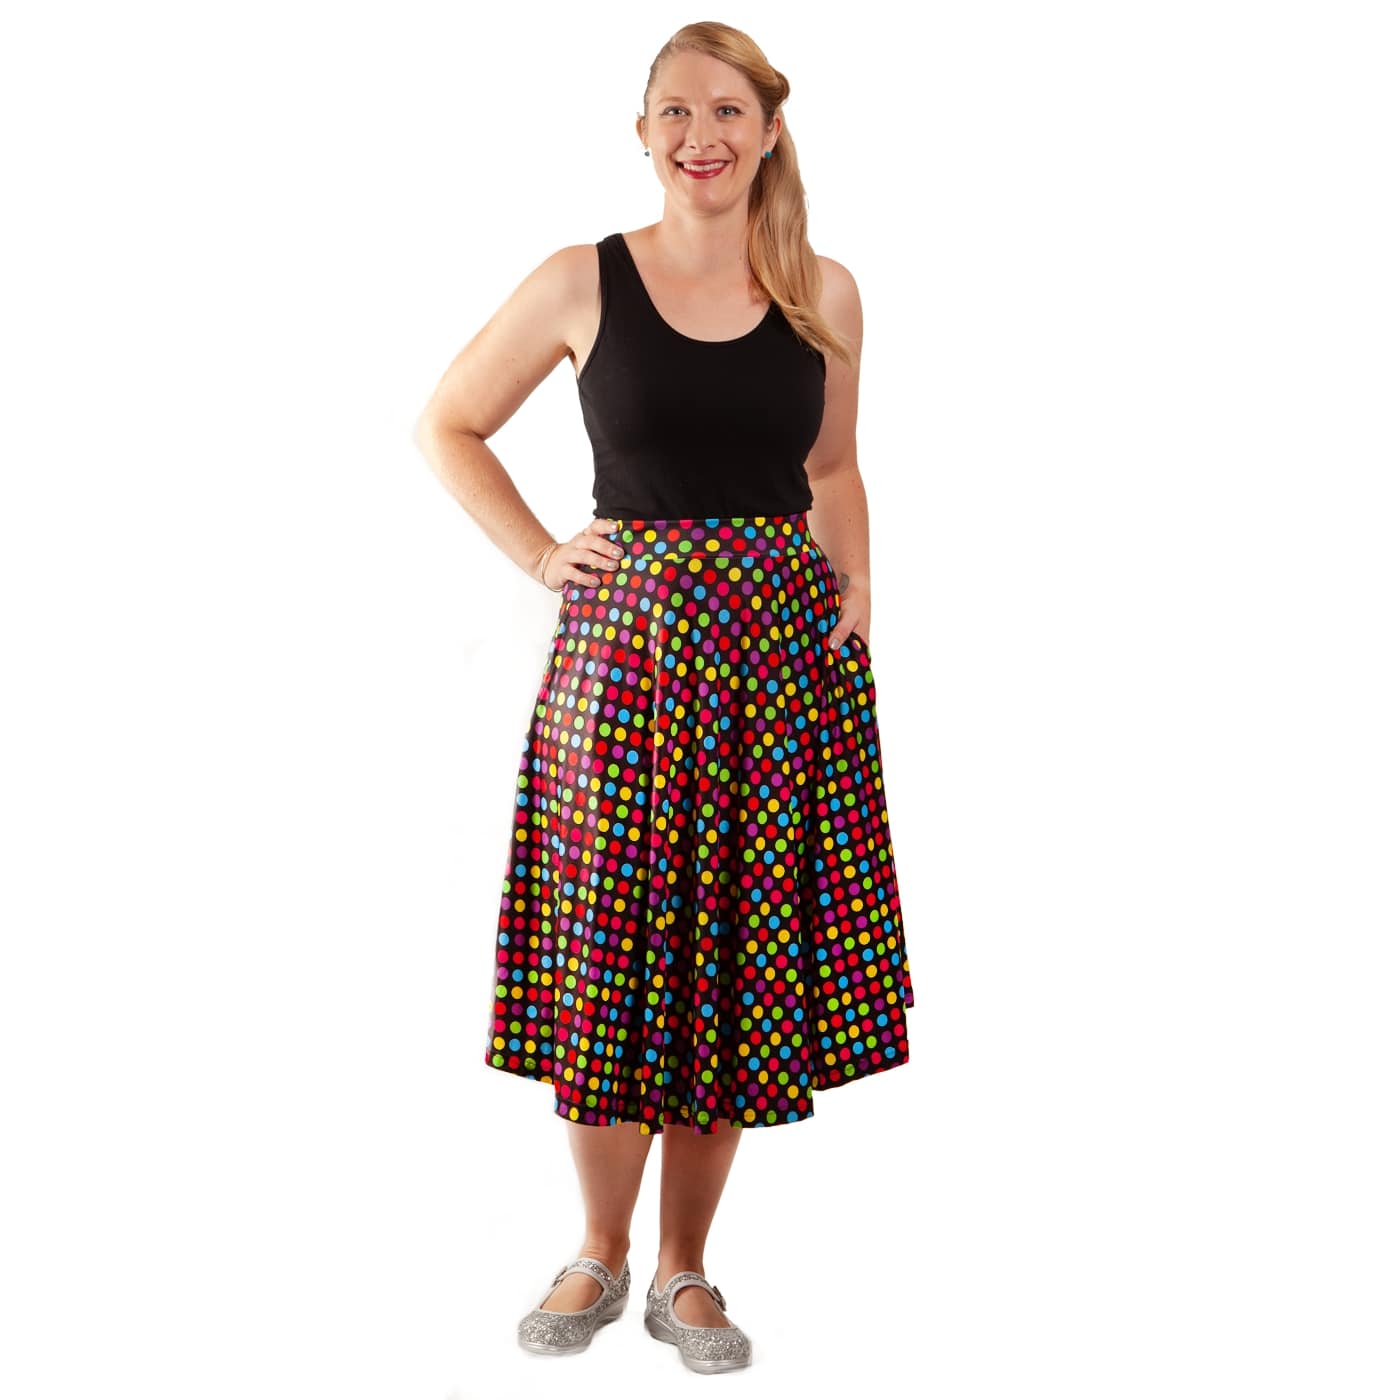 Confetti Swishy Skirt by RainbowsAndFairies.com.au (Rainbow Spots - Polka Dots - Colourful - Circle Skirt With Pockets - Mod Retro) - SKU: CL_SWISH_CONFT_ORG - Pic-05